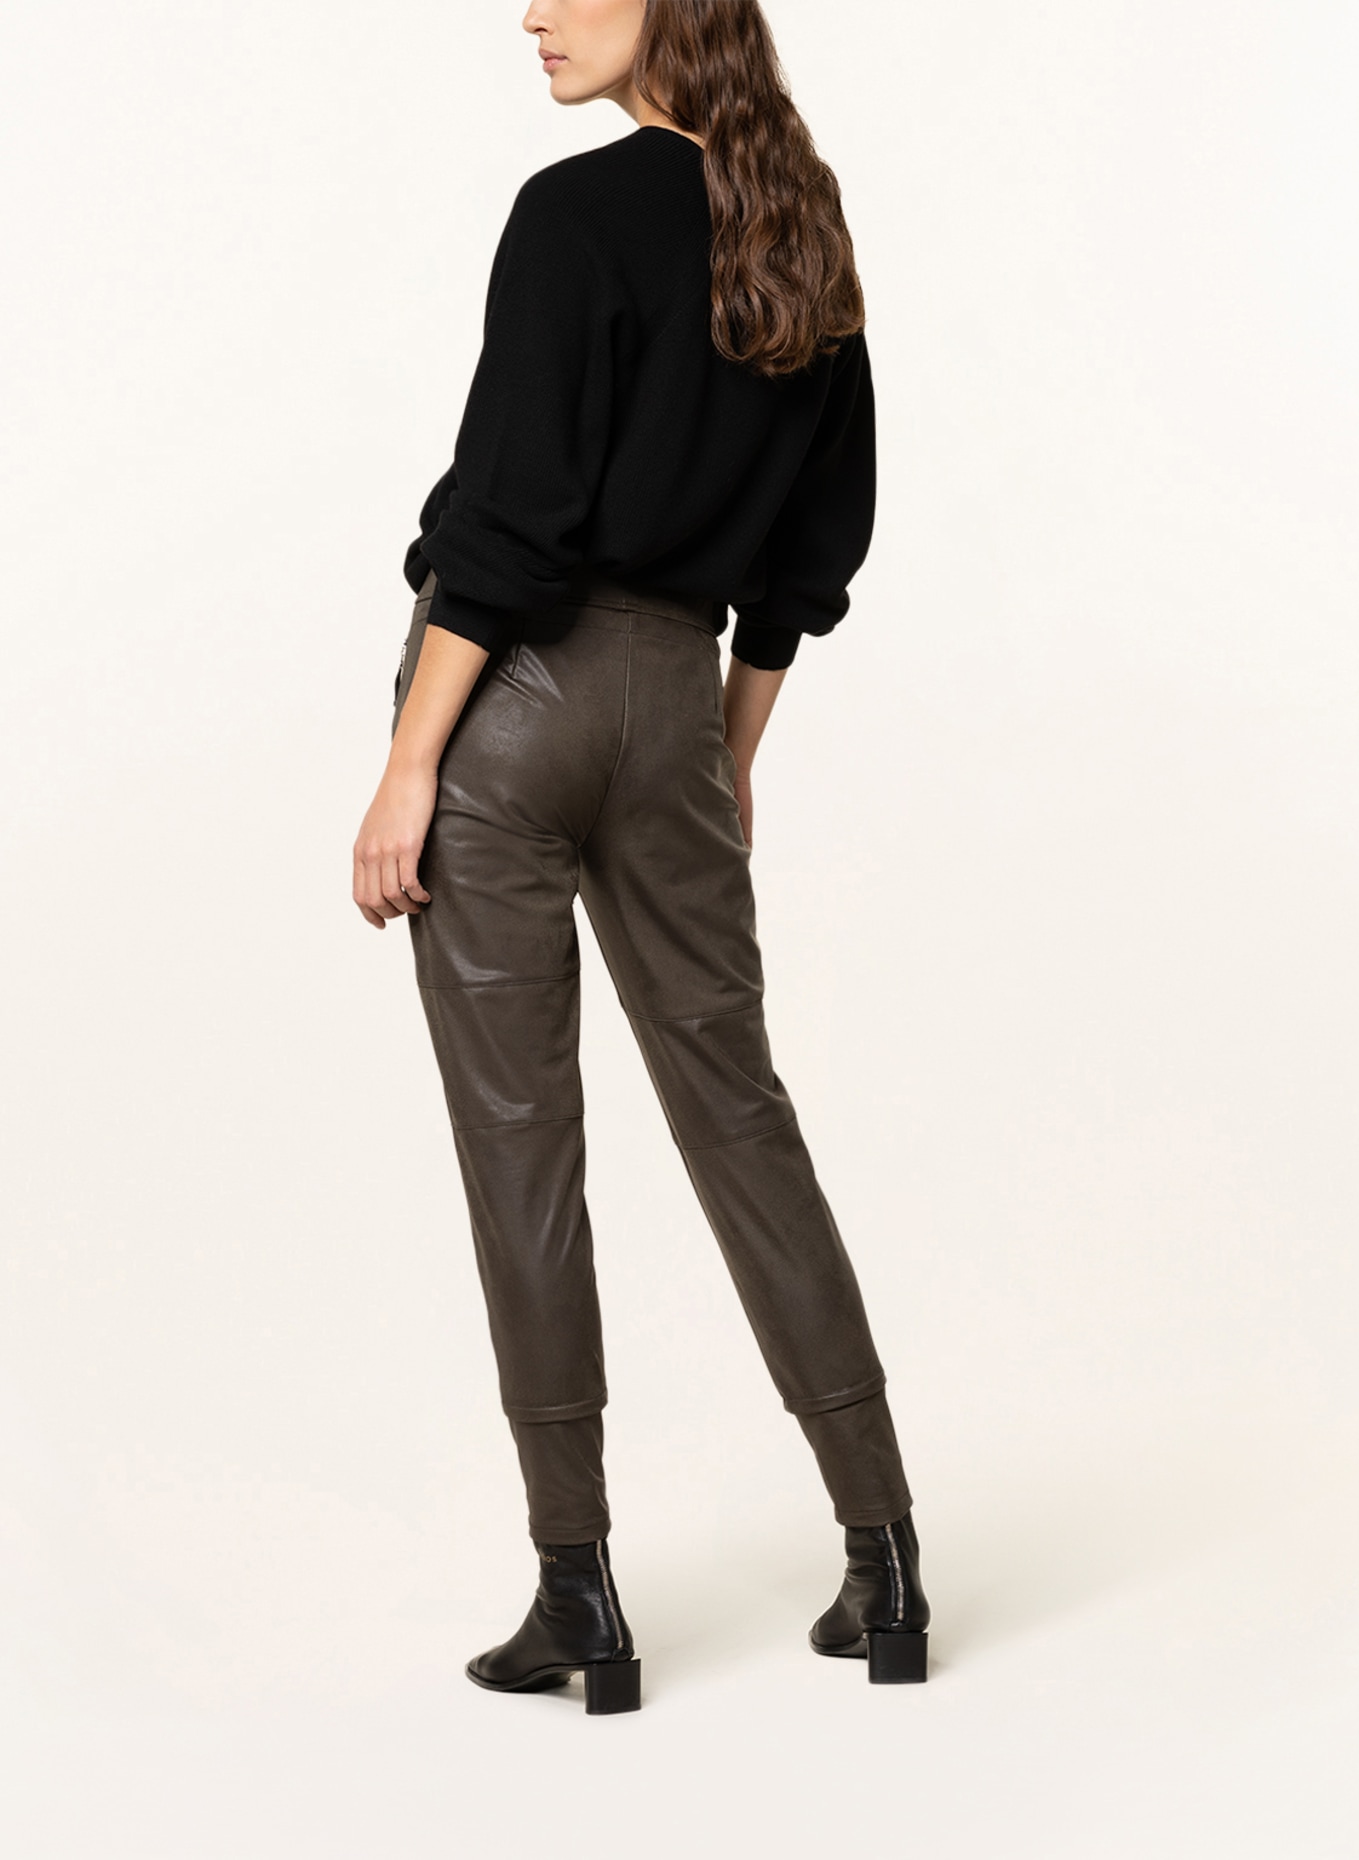 RAFFAELLO ROSSI Trousers CANDY in leather look, Color: KHAKI (Image 3)